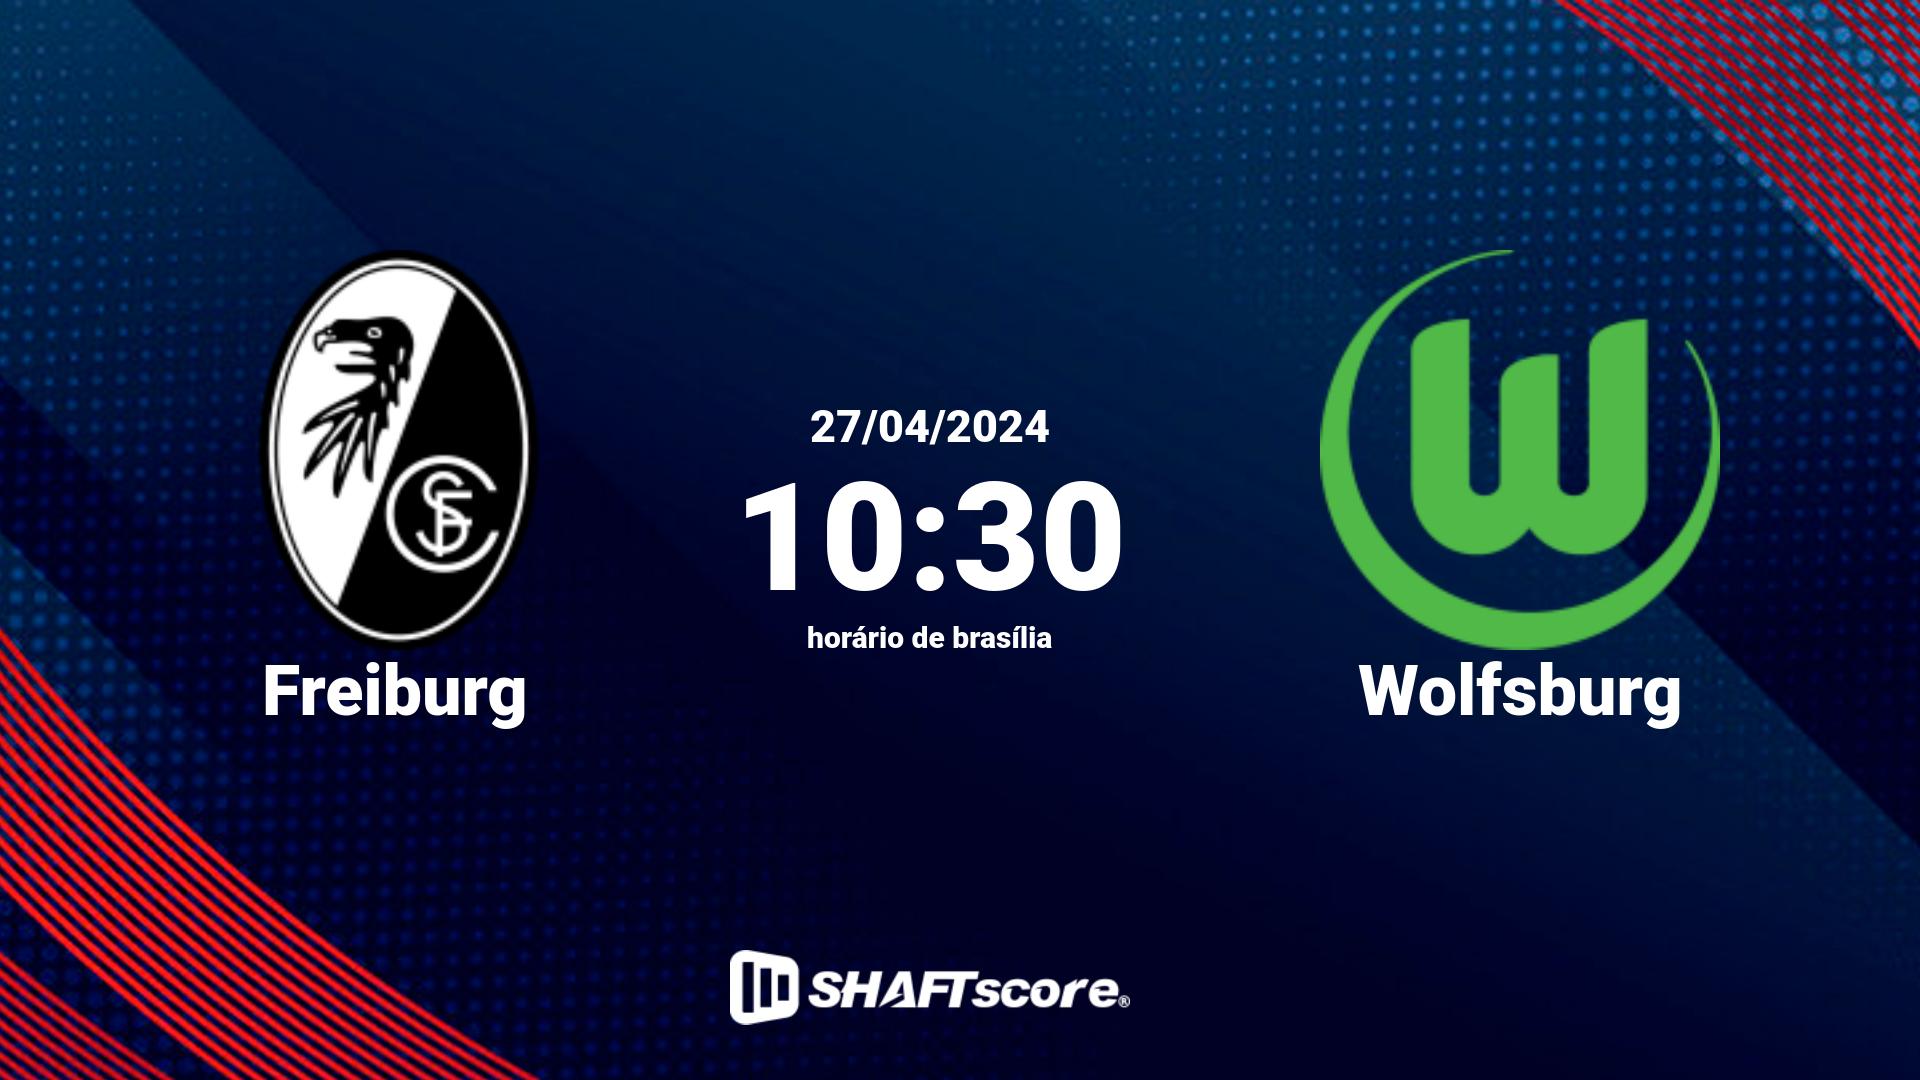 Estatísticas do jogo Freiburg vs Wolfsburg 27.04 10:30